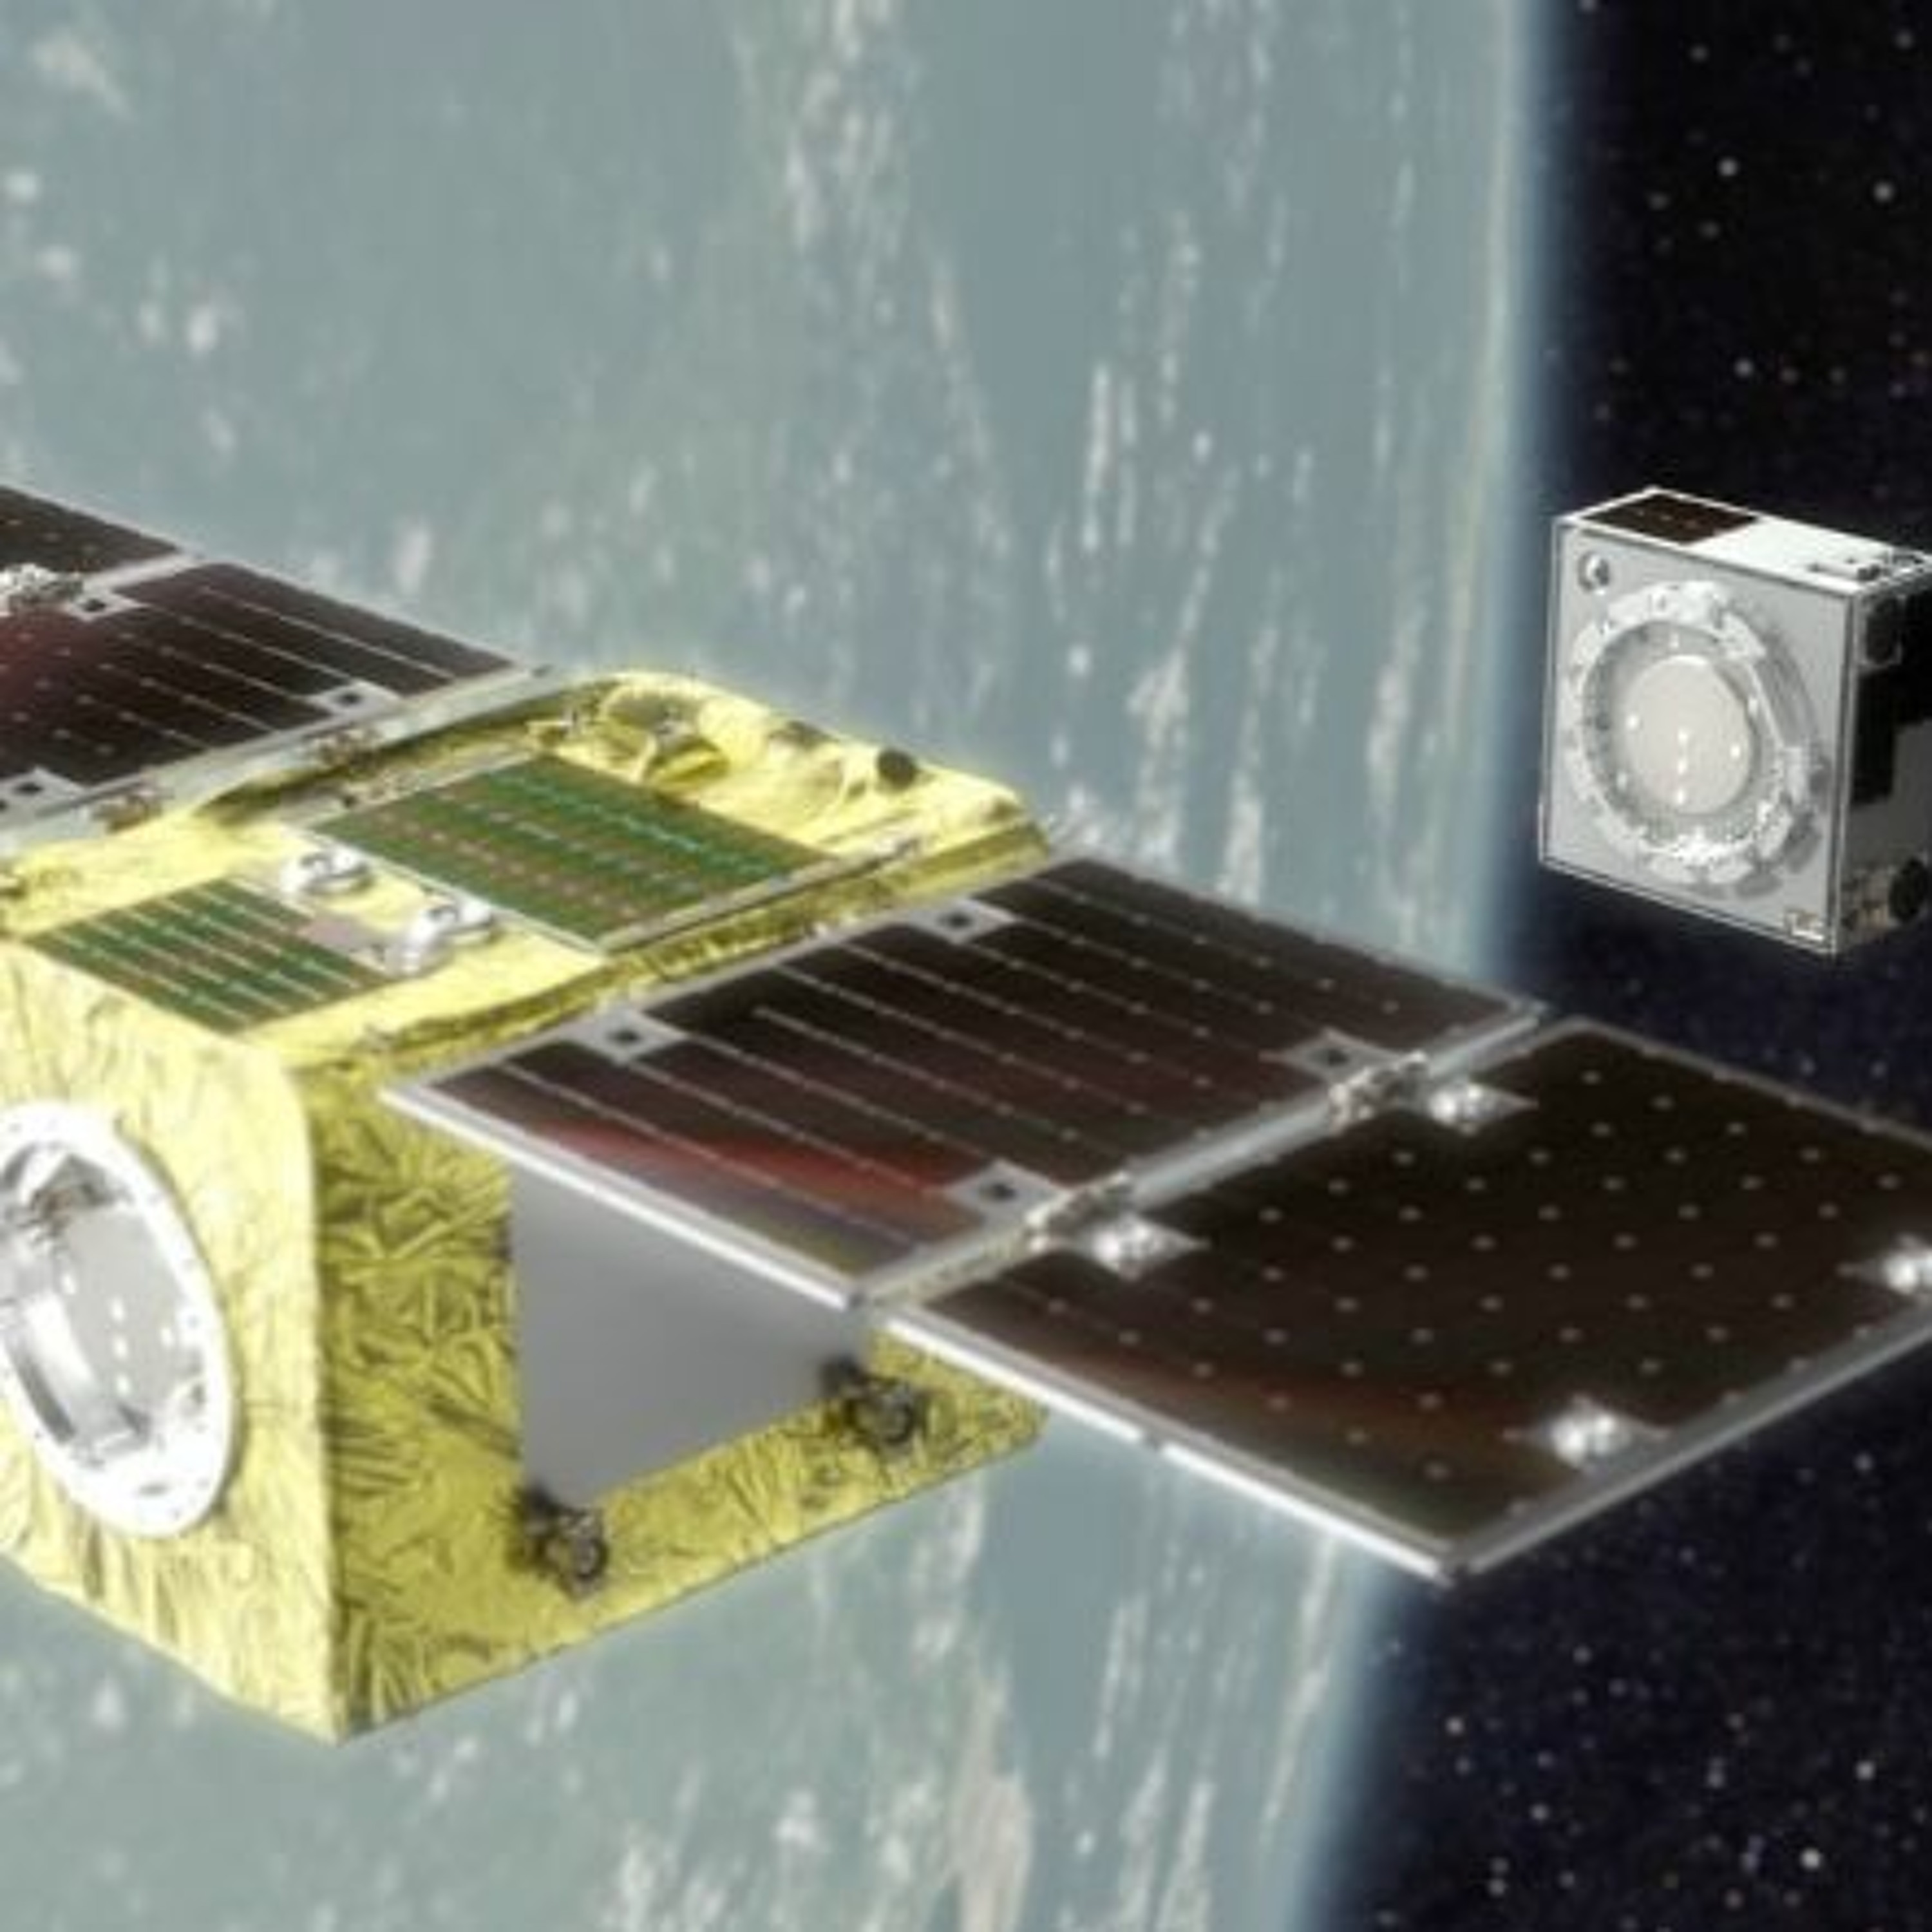 Astroscale - Space development demands sustainability